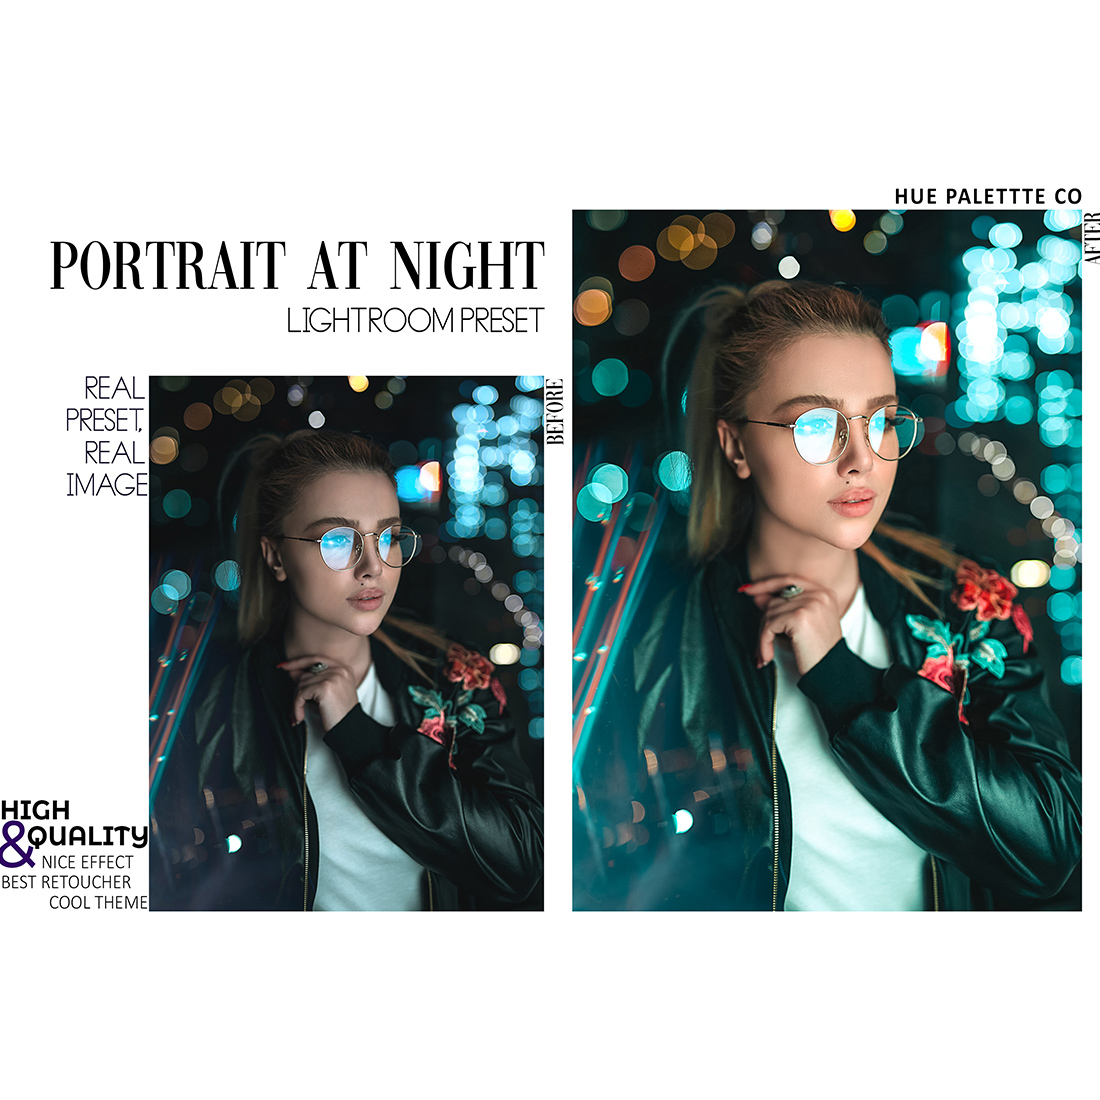 15 Float On Night Air Lightroom Presets, Concert Mobile Preset, Party Club Desktop, Lifestyle Portrait Theme Instagram LR Filter DNG Bright preview image.